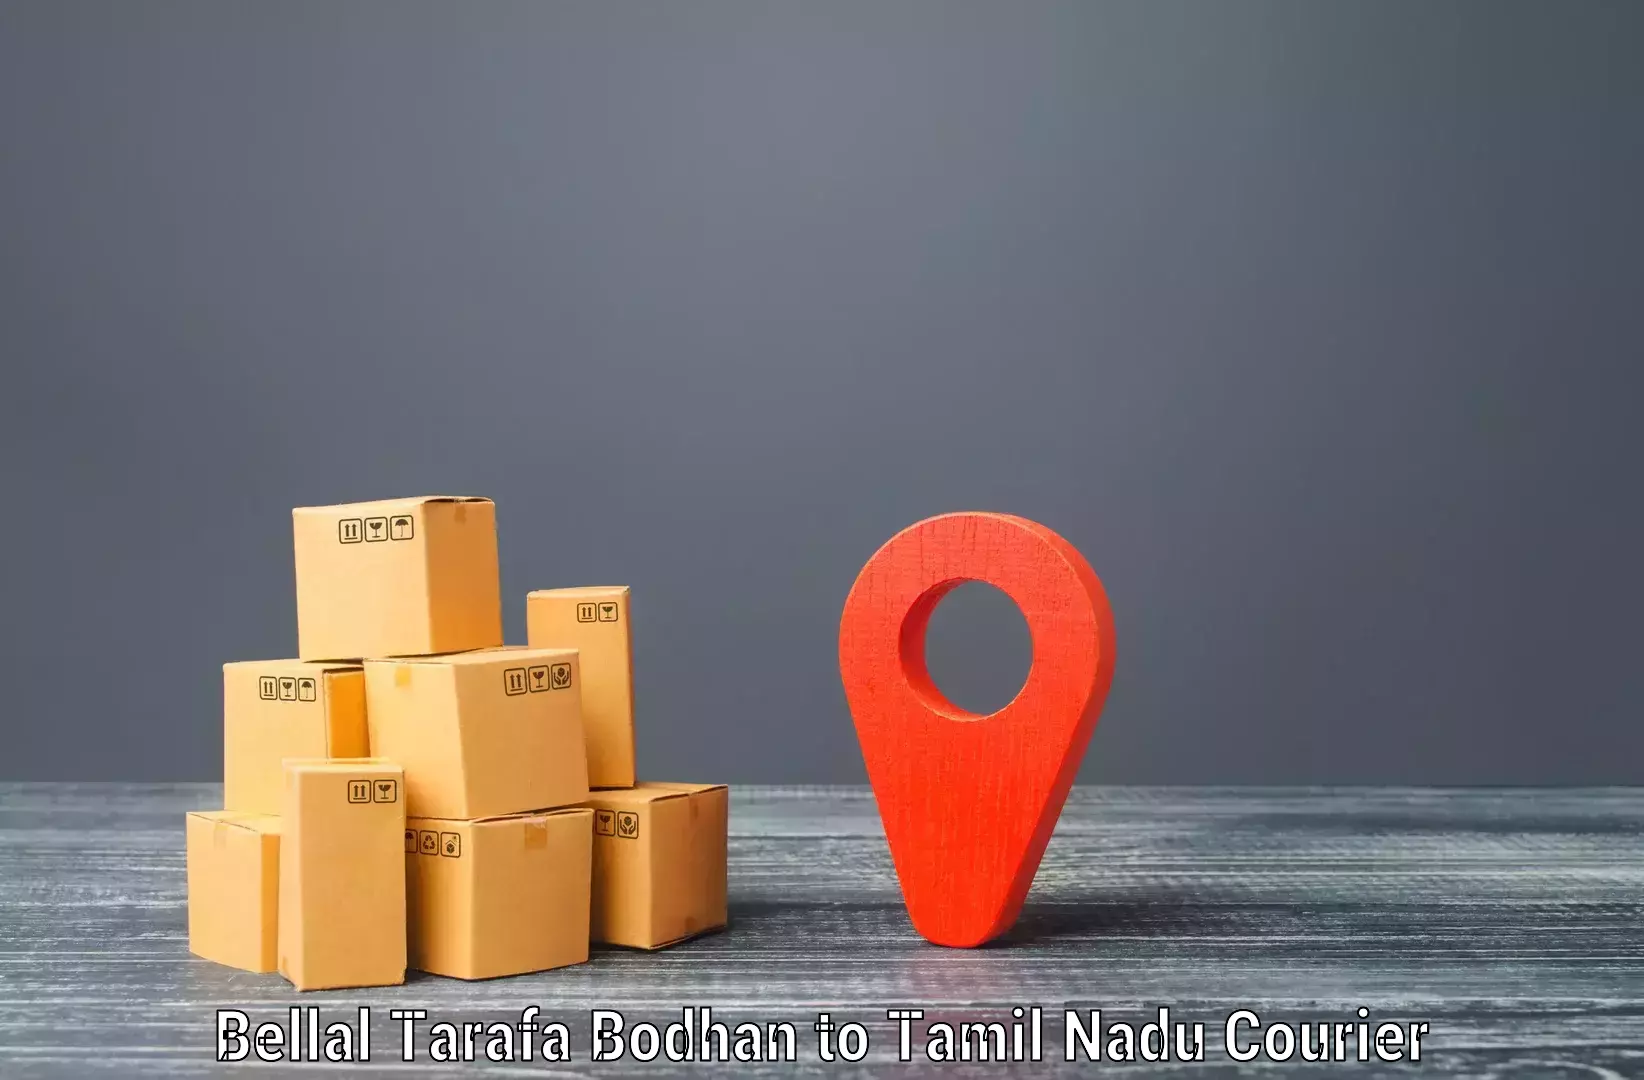 Online shipping calculator Bellal Tarafa Bodhan to Palani